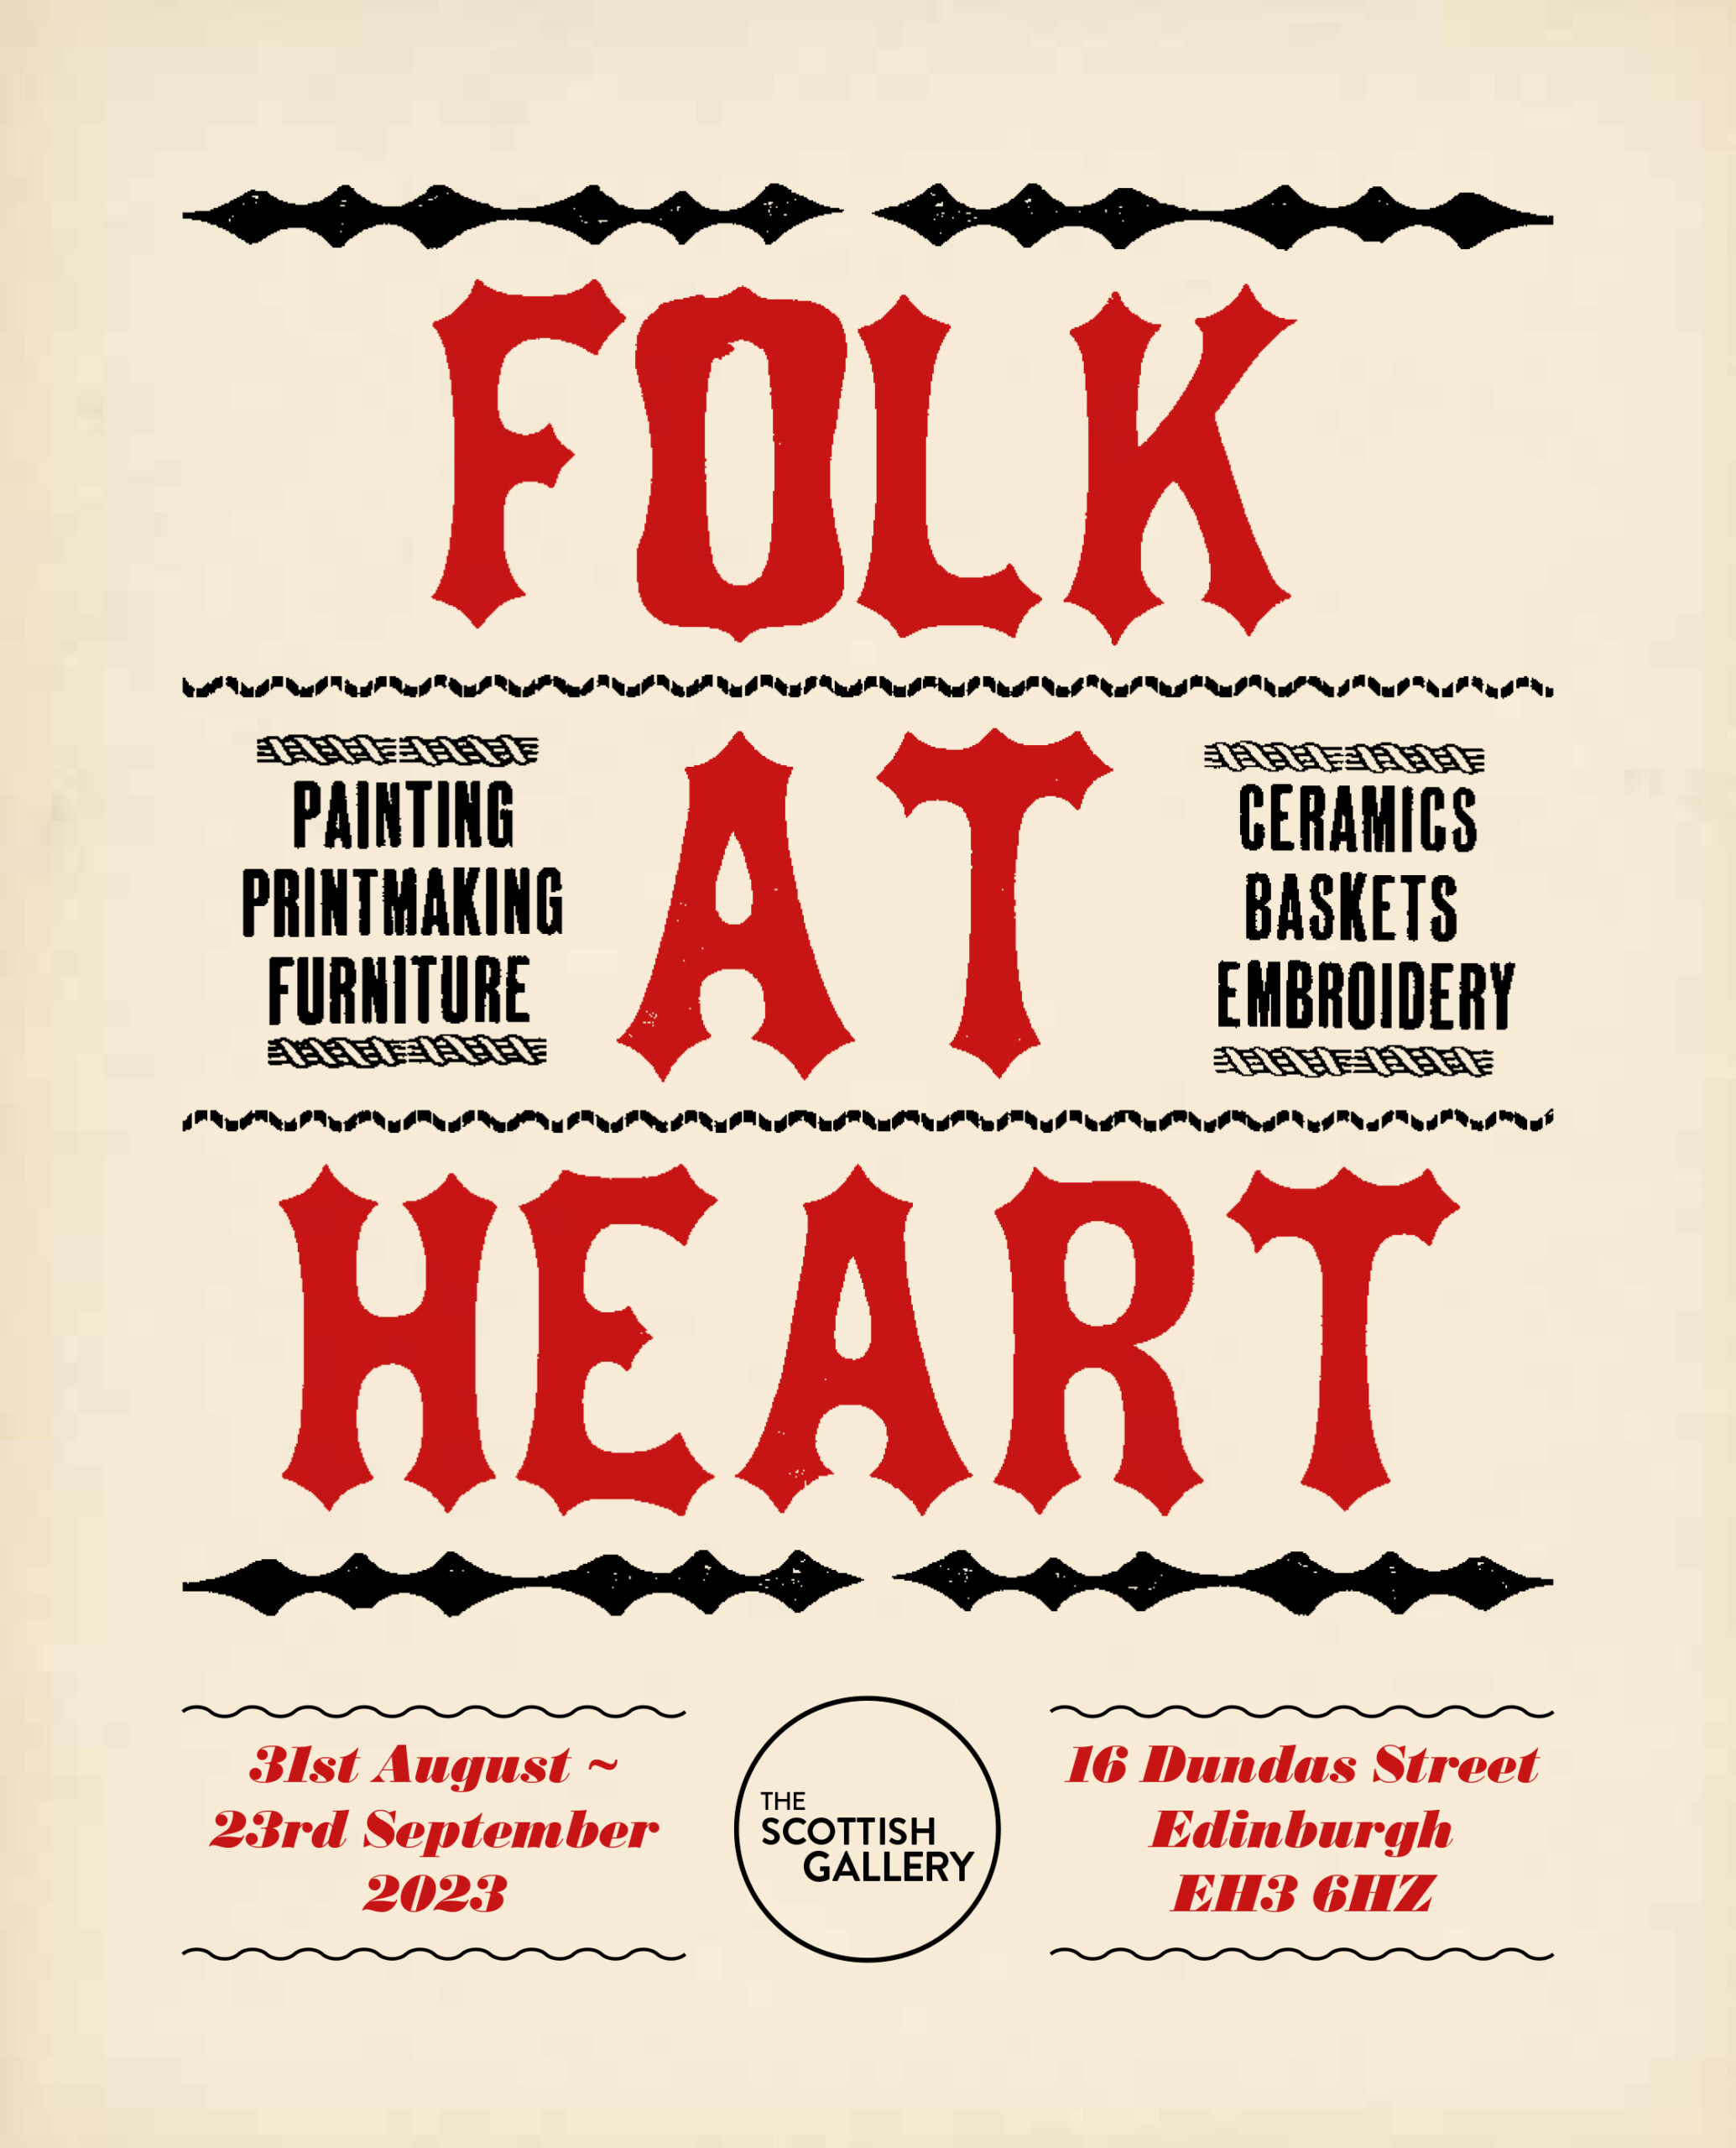 ‘Folk At Heart’ The Scottish Gallery